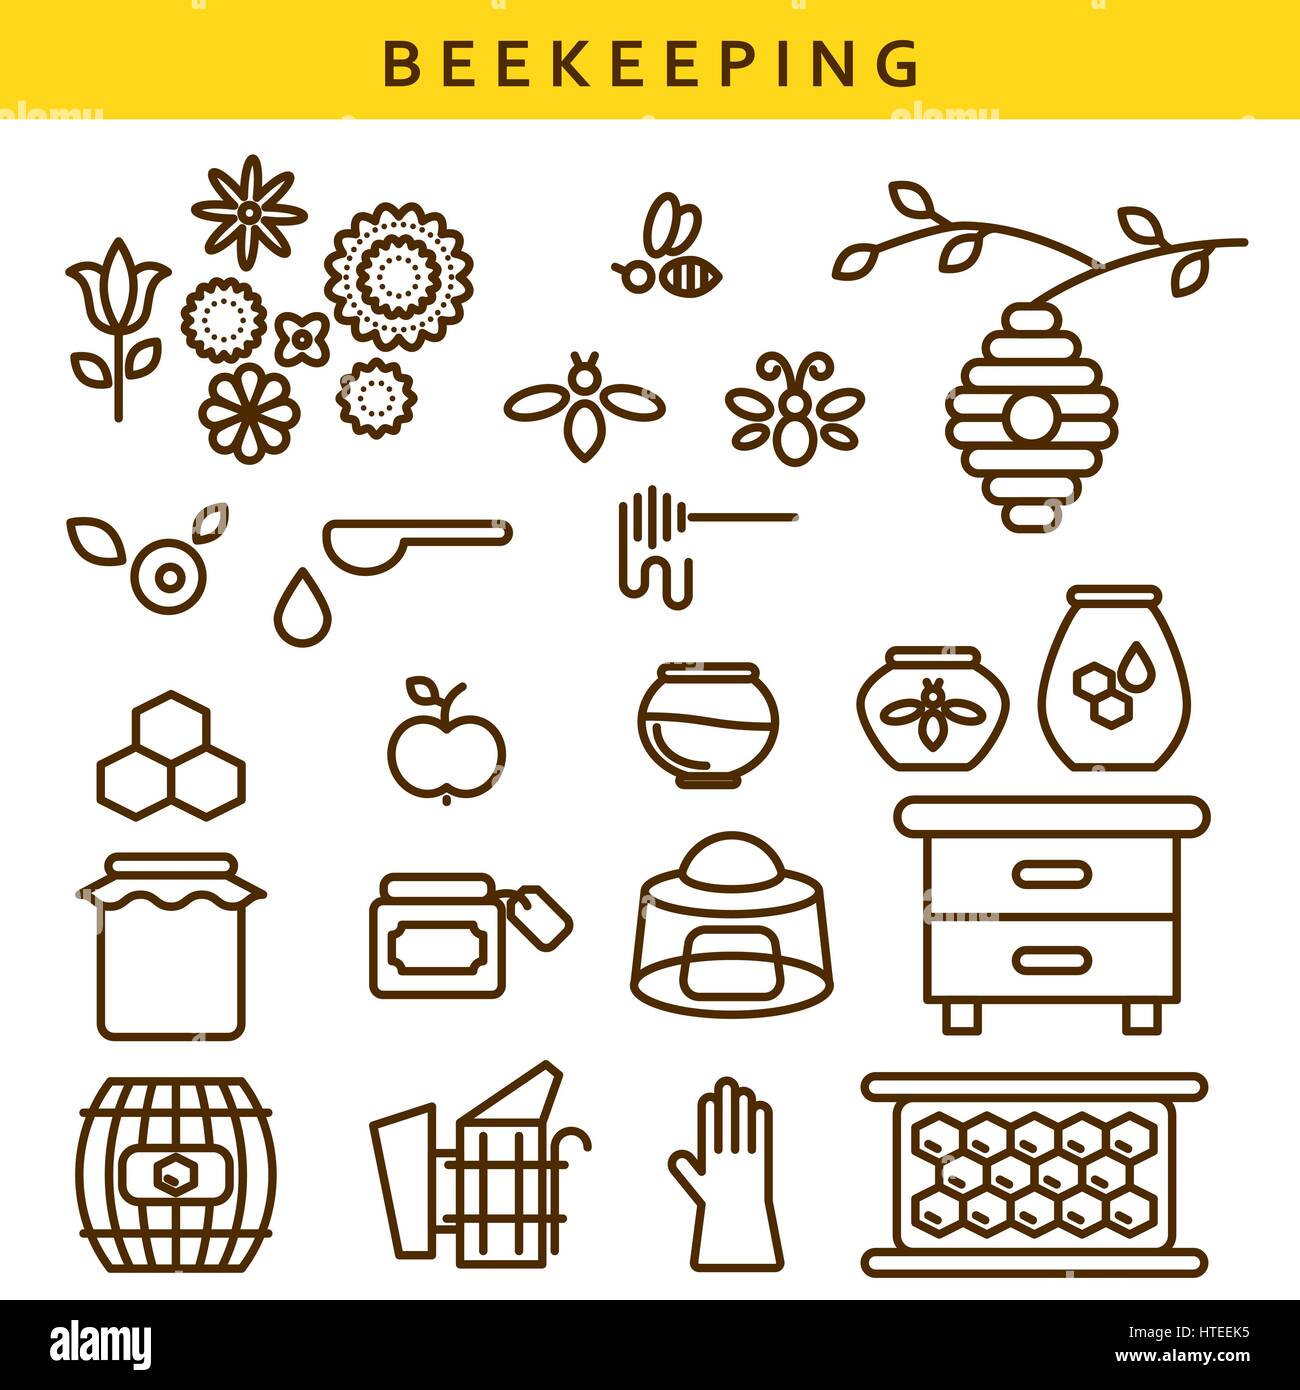 Beekeeping vector line icon set. Stock Vector